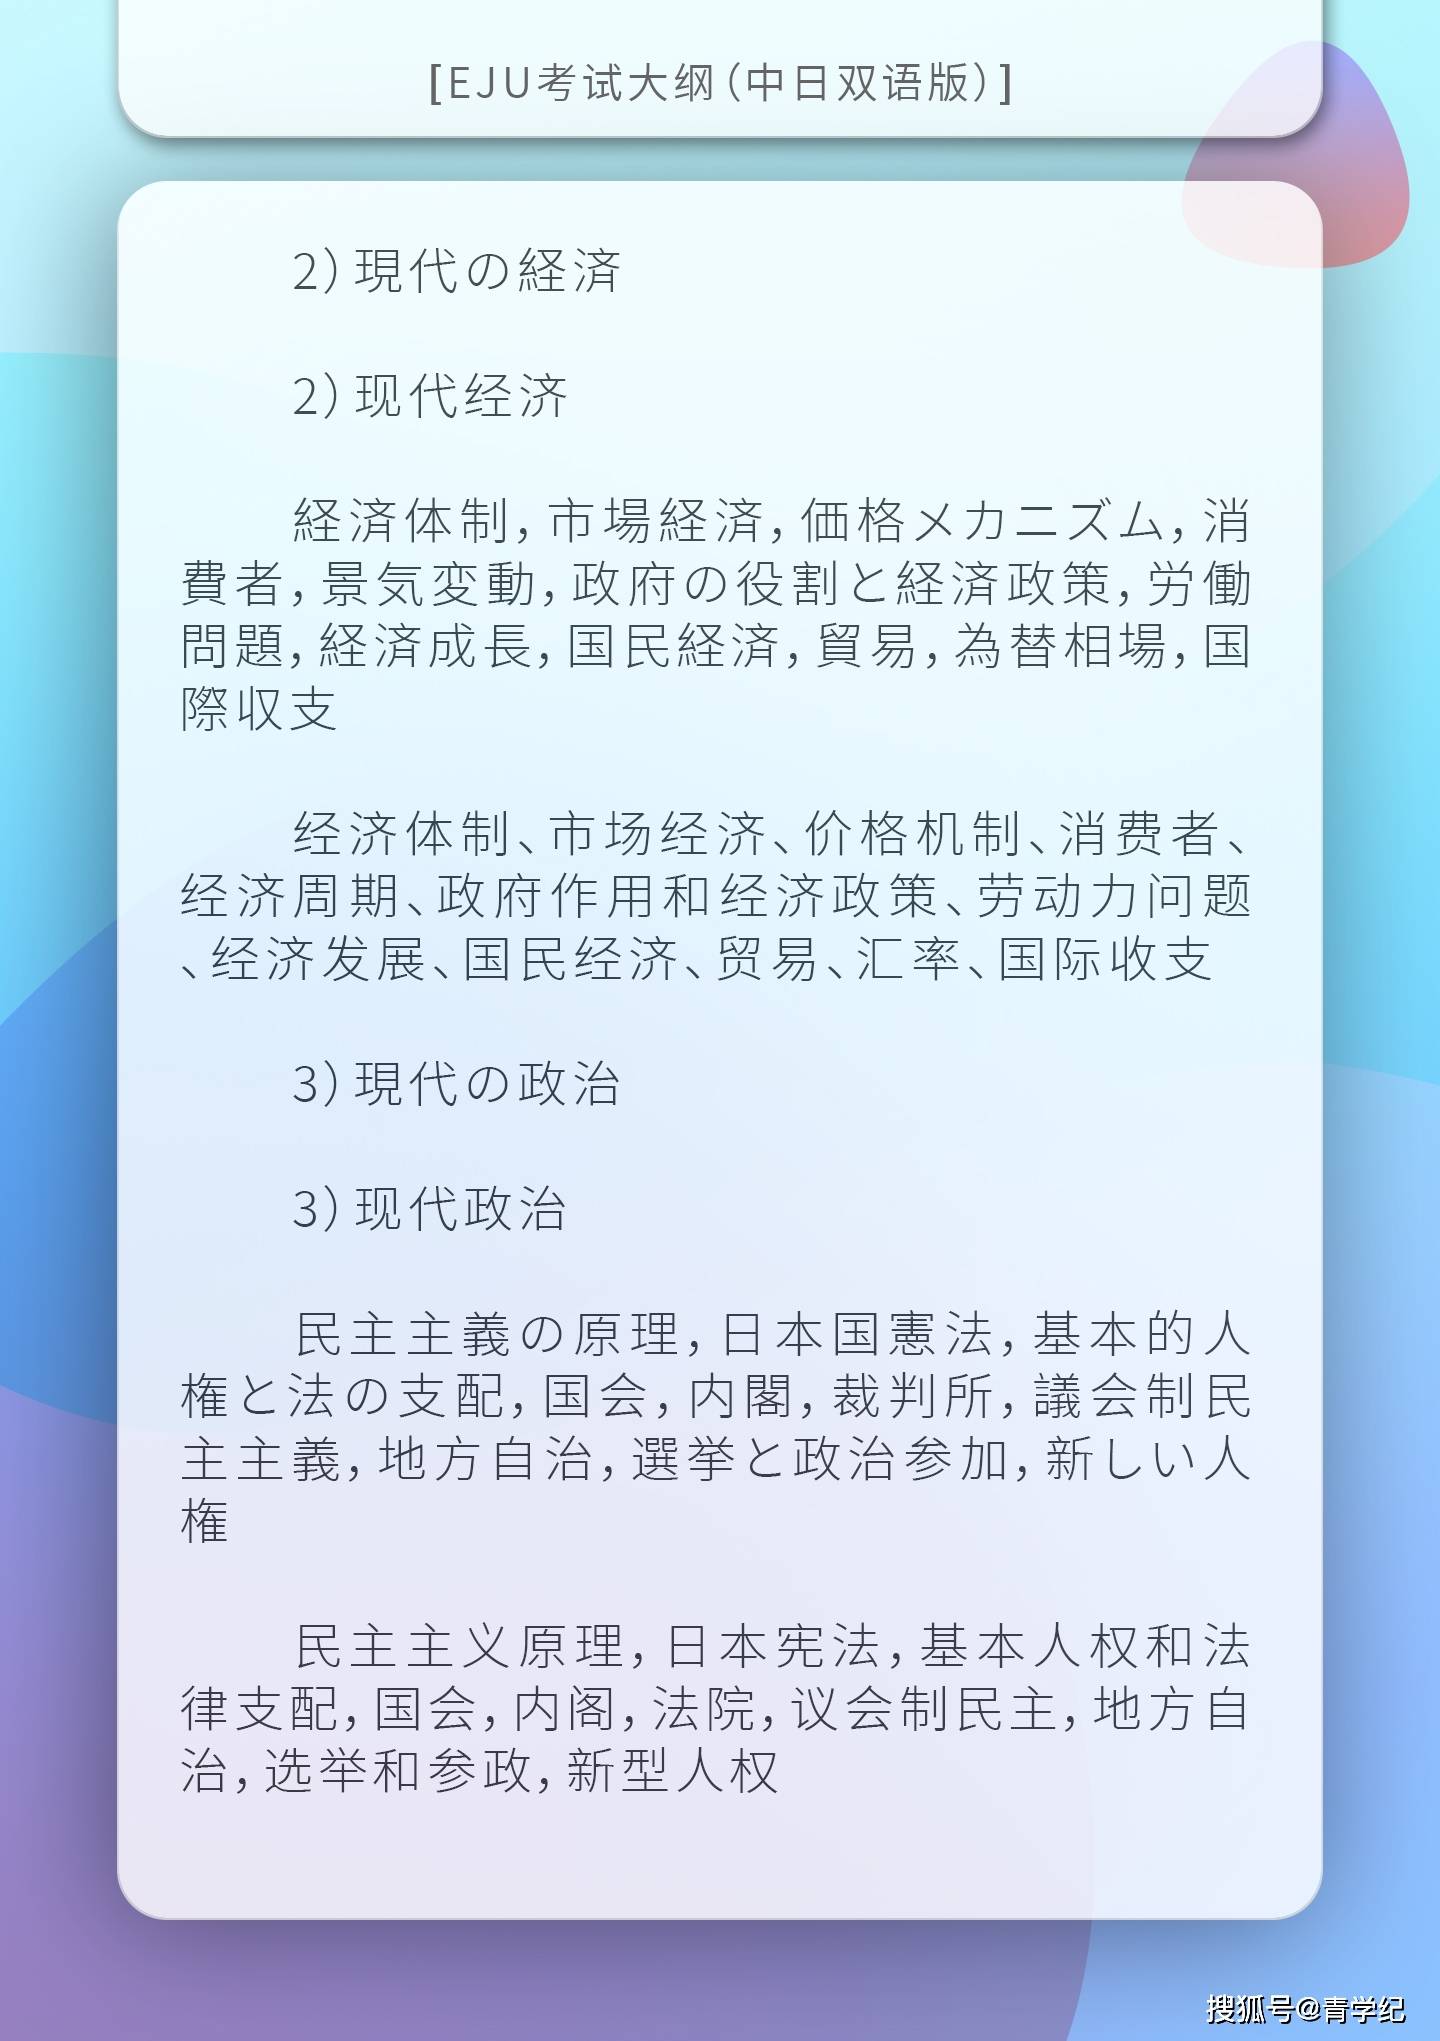 Eju考试大纲 中日双语版 中 搜狐大视野 搜狐新闻